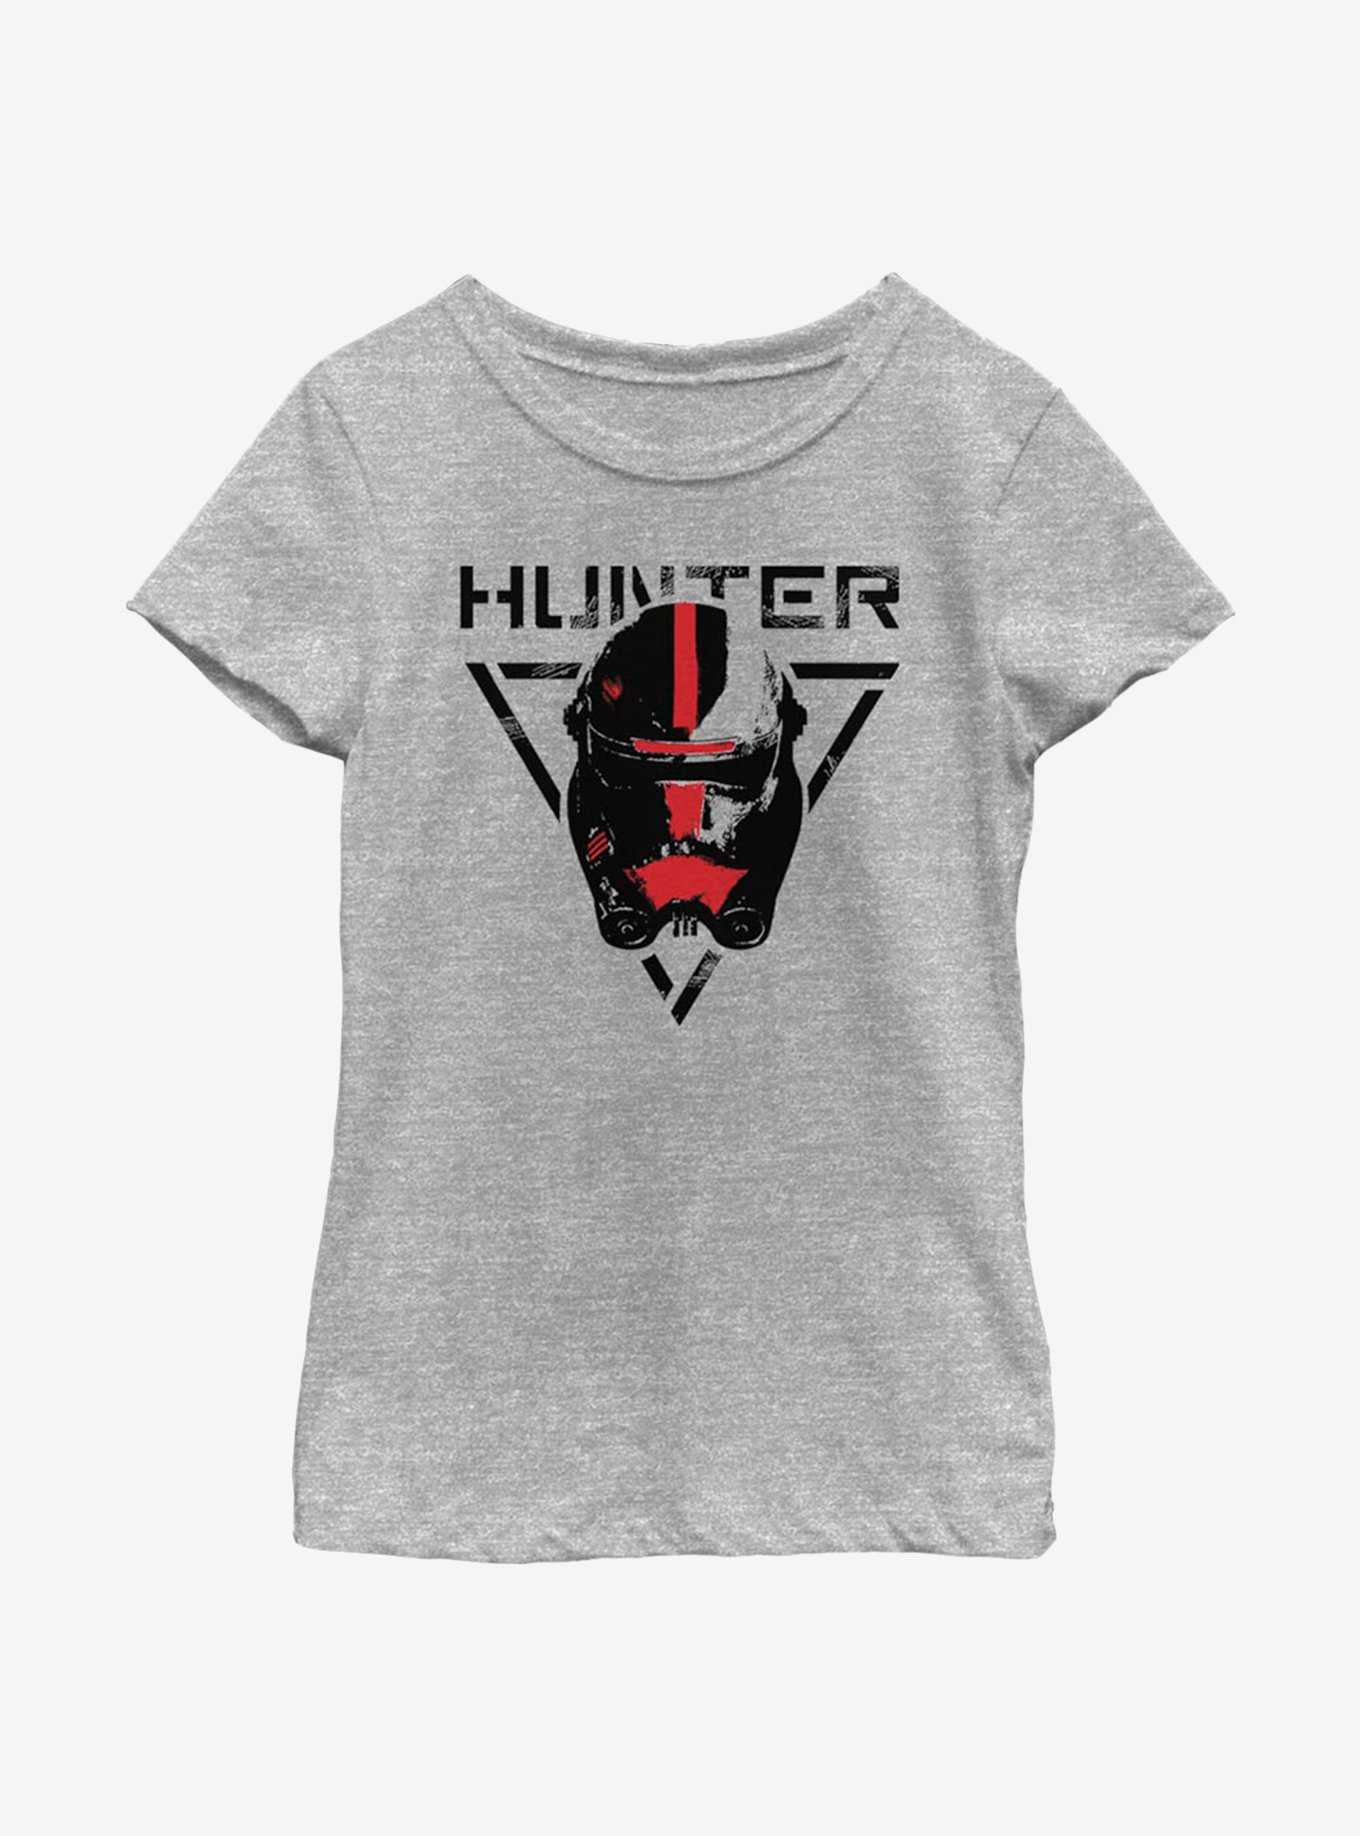 Star Wars: The Bad Batch Hunter Youth Girls T-Shirt, , hi-res